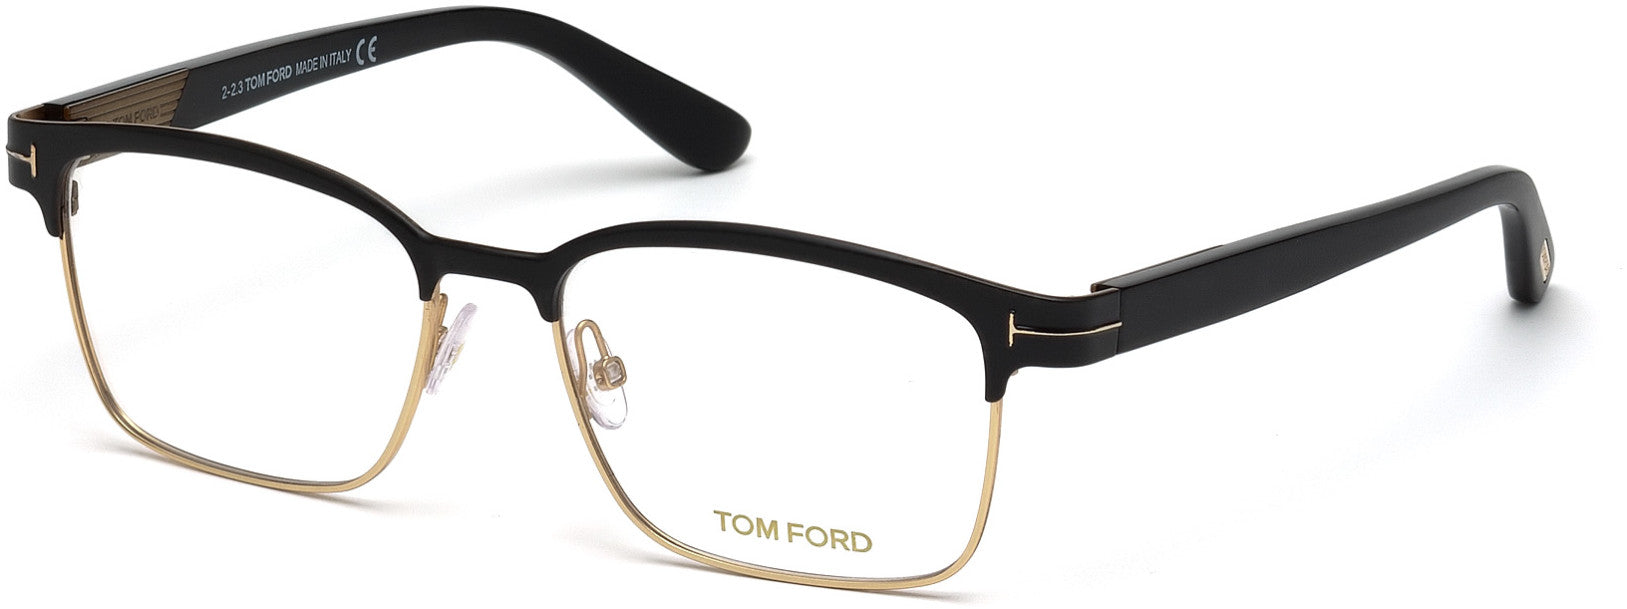 Tom Ford FT5323 Geometric Eyeglasses 002-002 - Matte Black, Shiny Rose Gold